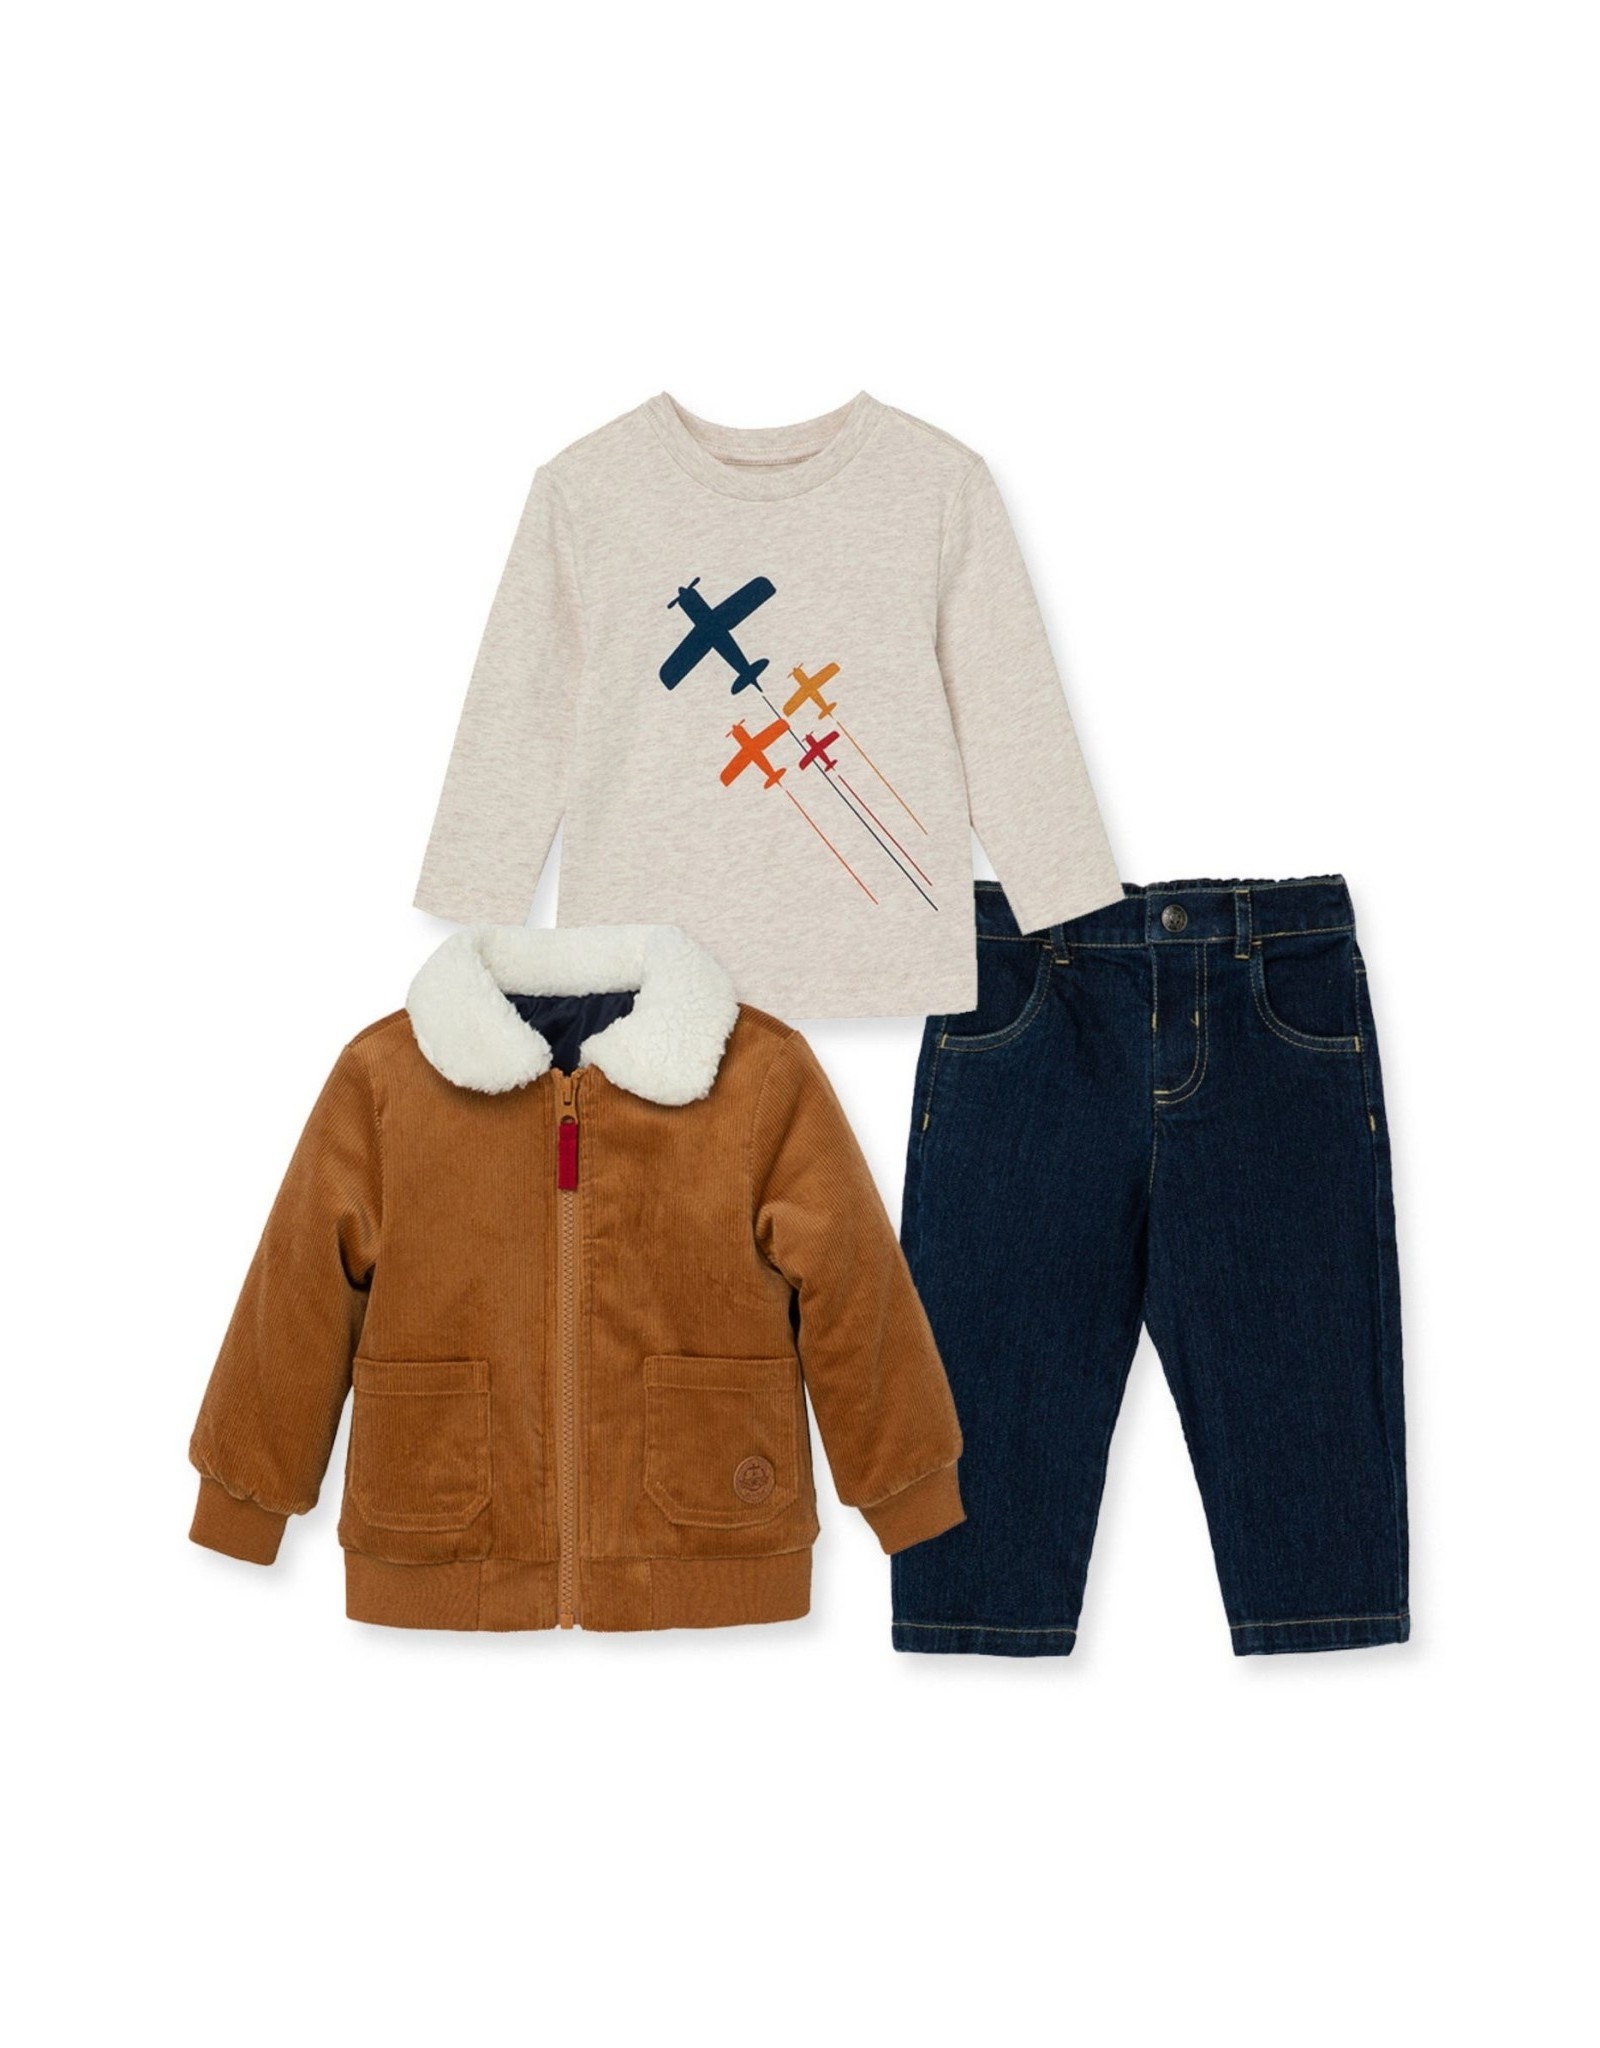 Little Me Airplane Shirt, Jacket & Pants Set